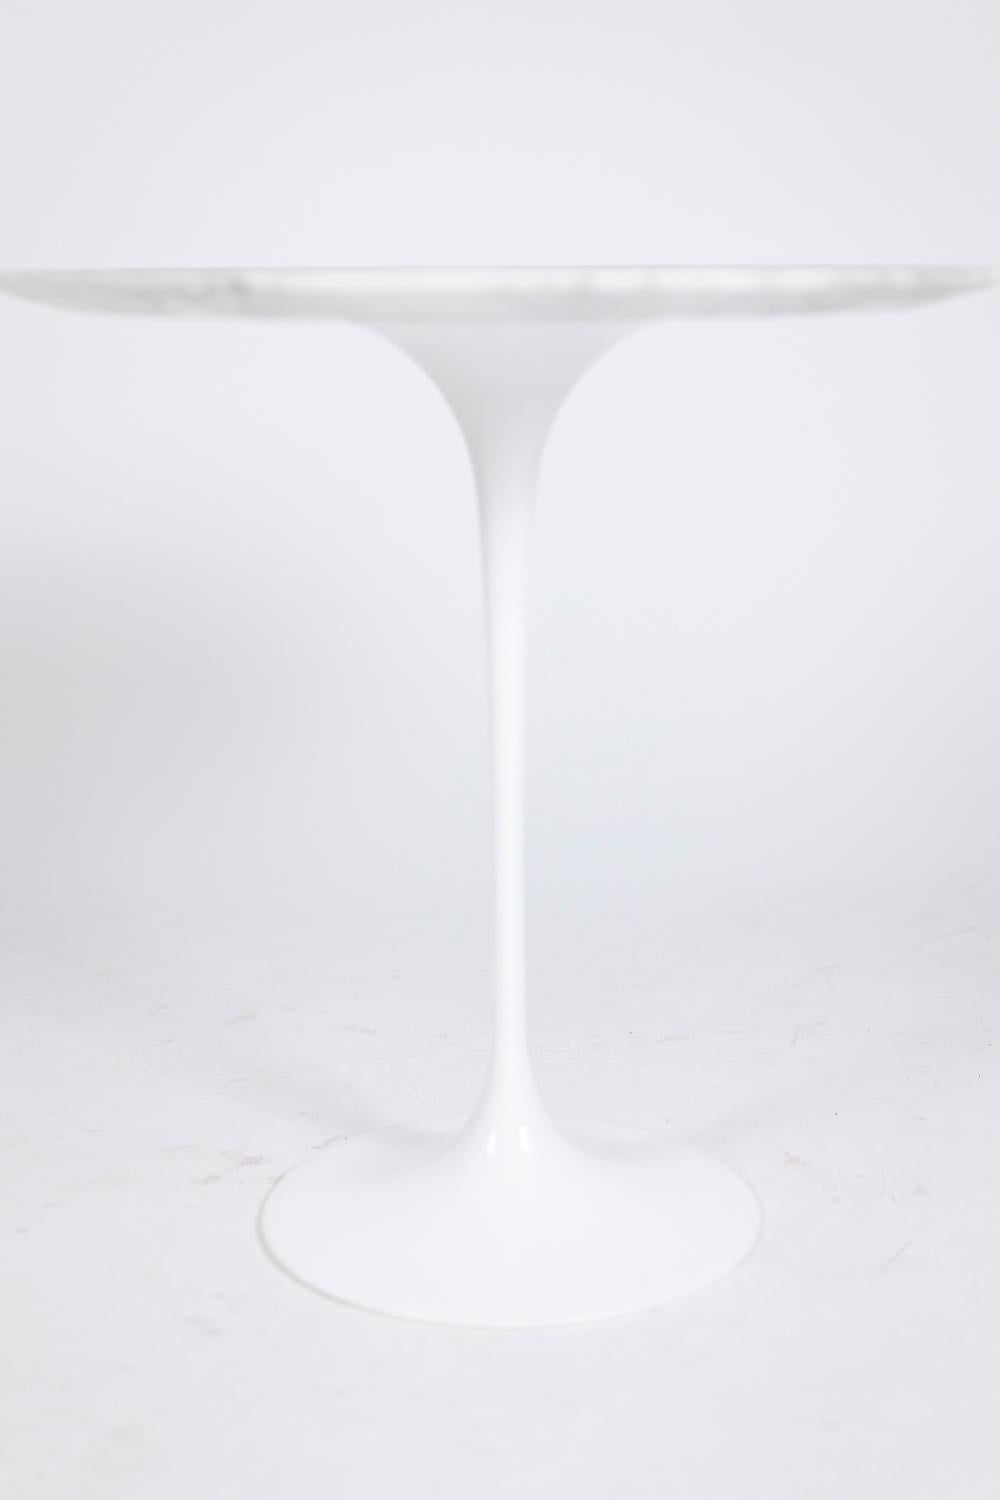 Centraméricain Knoll pour Saarinen, The Pedestal table Tulip, 20e siècle en vente